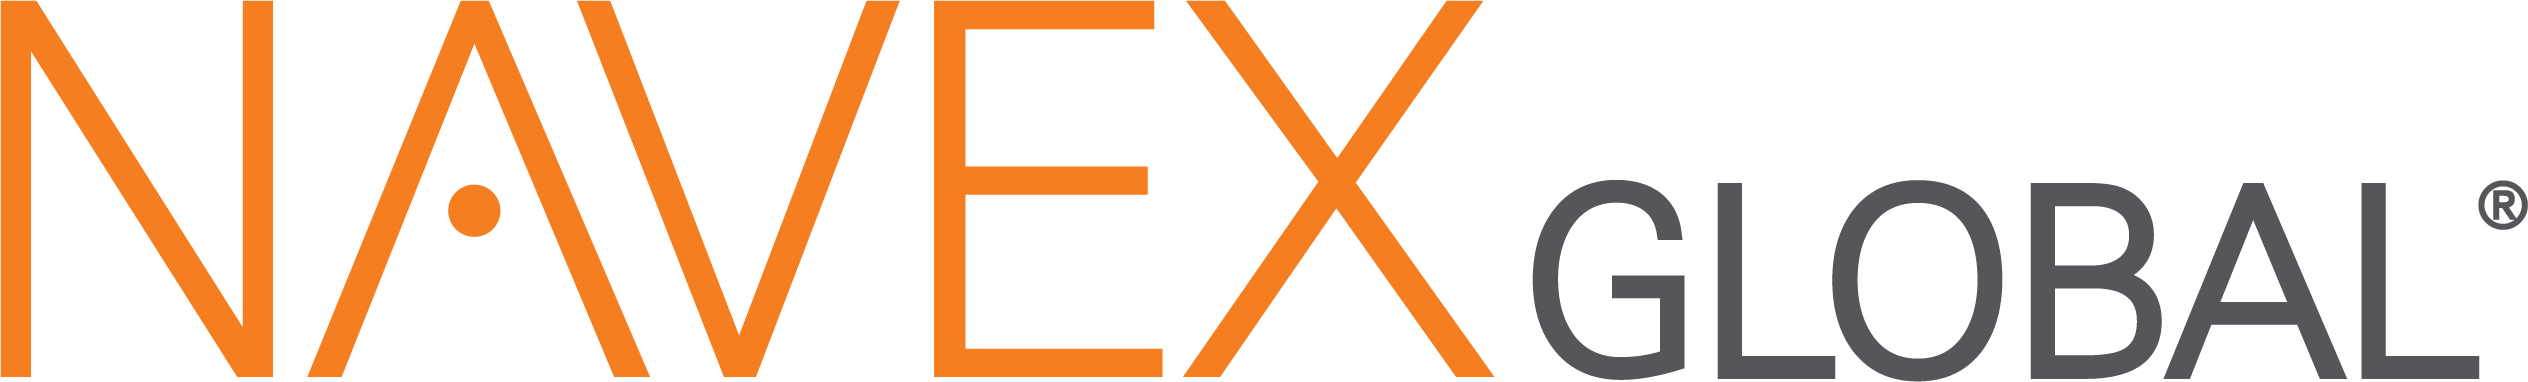 NAVEX_Global_Logo